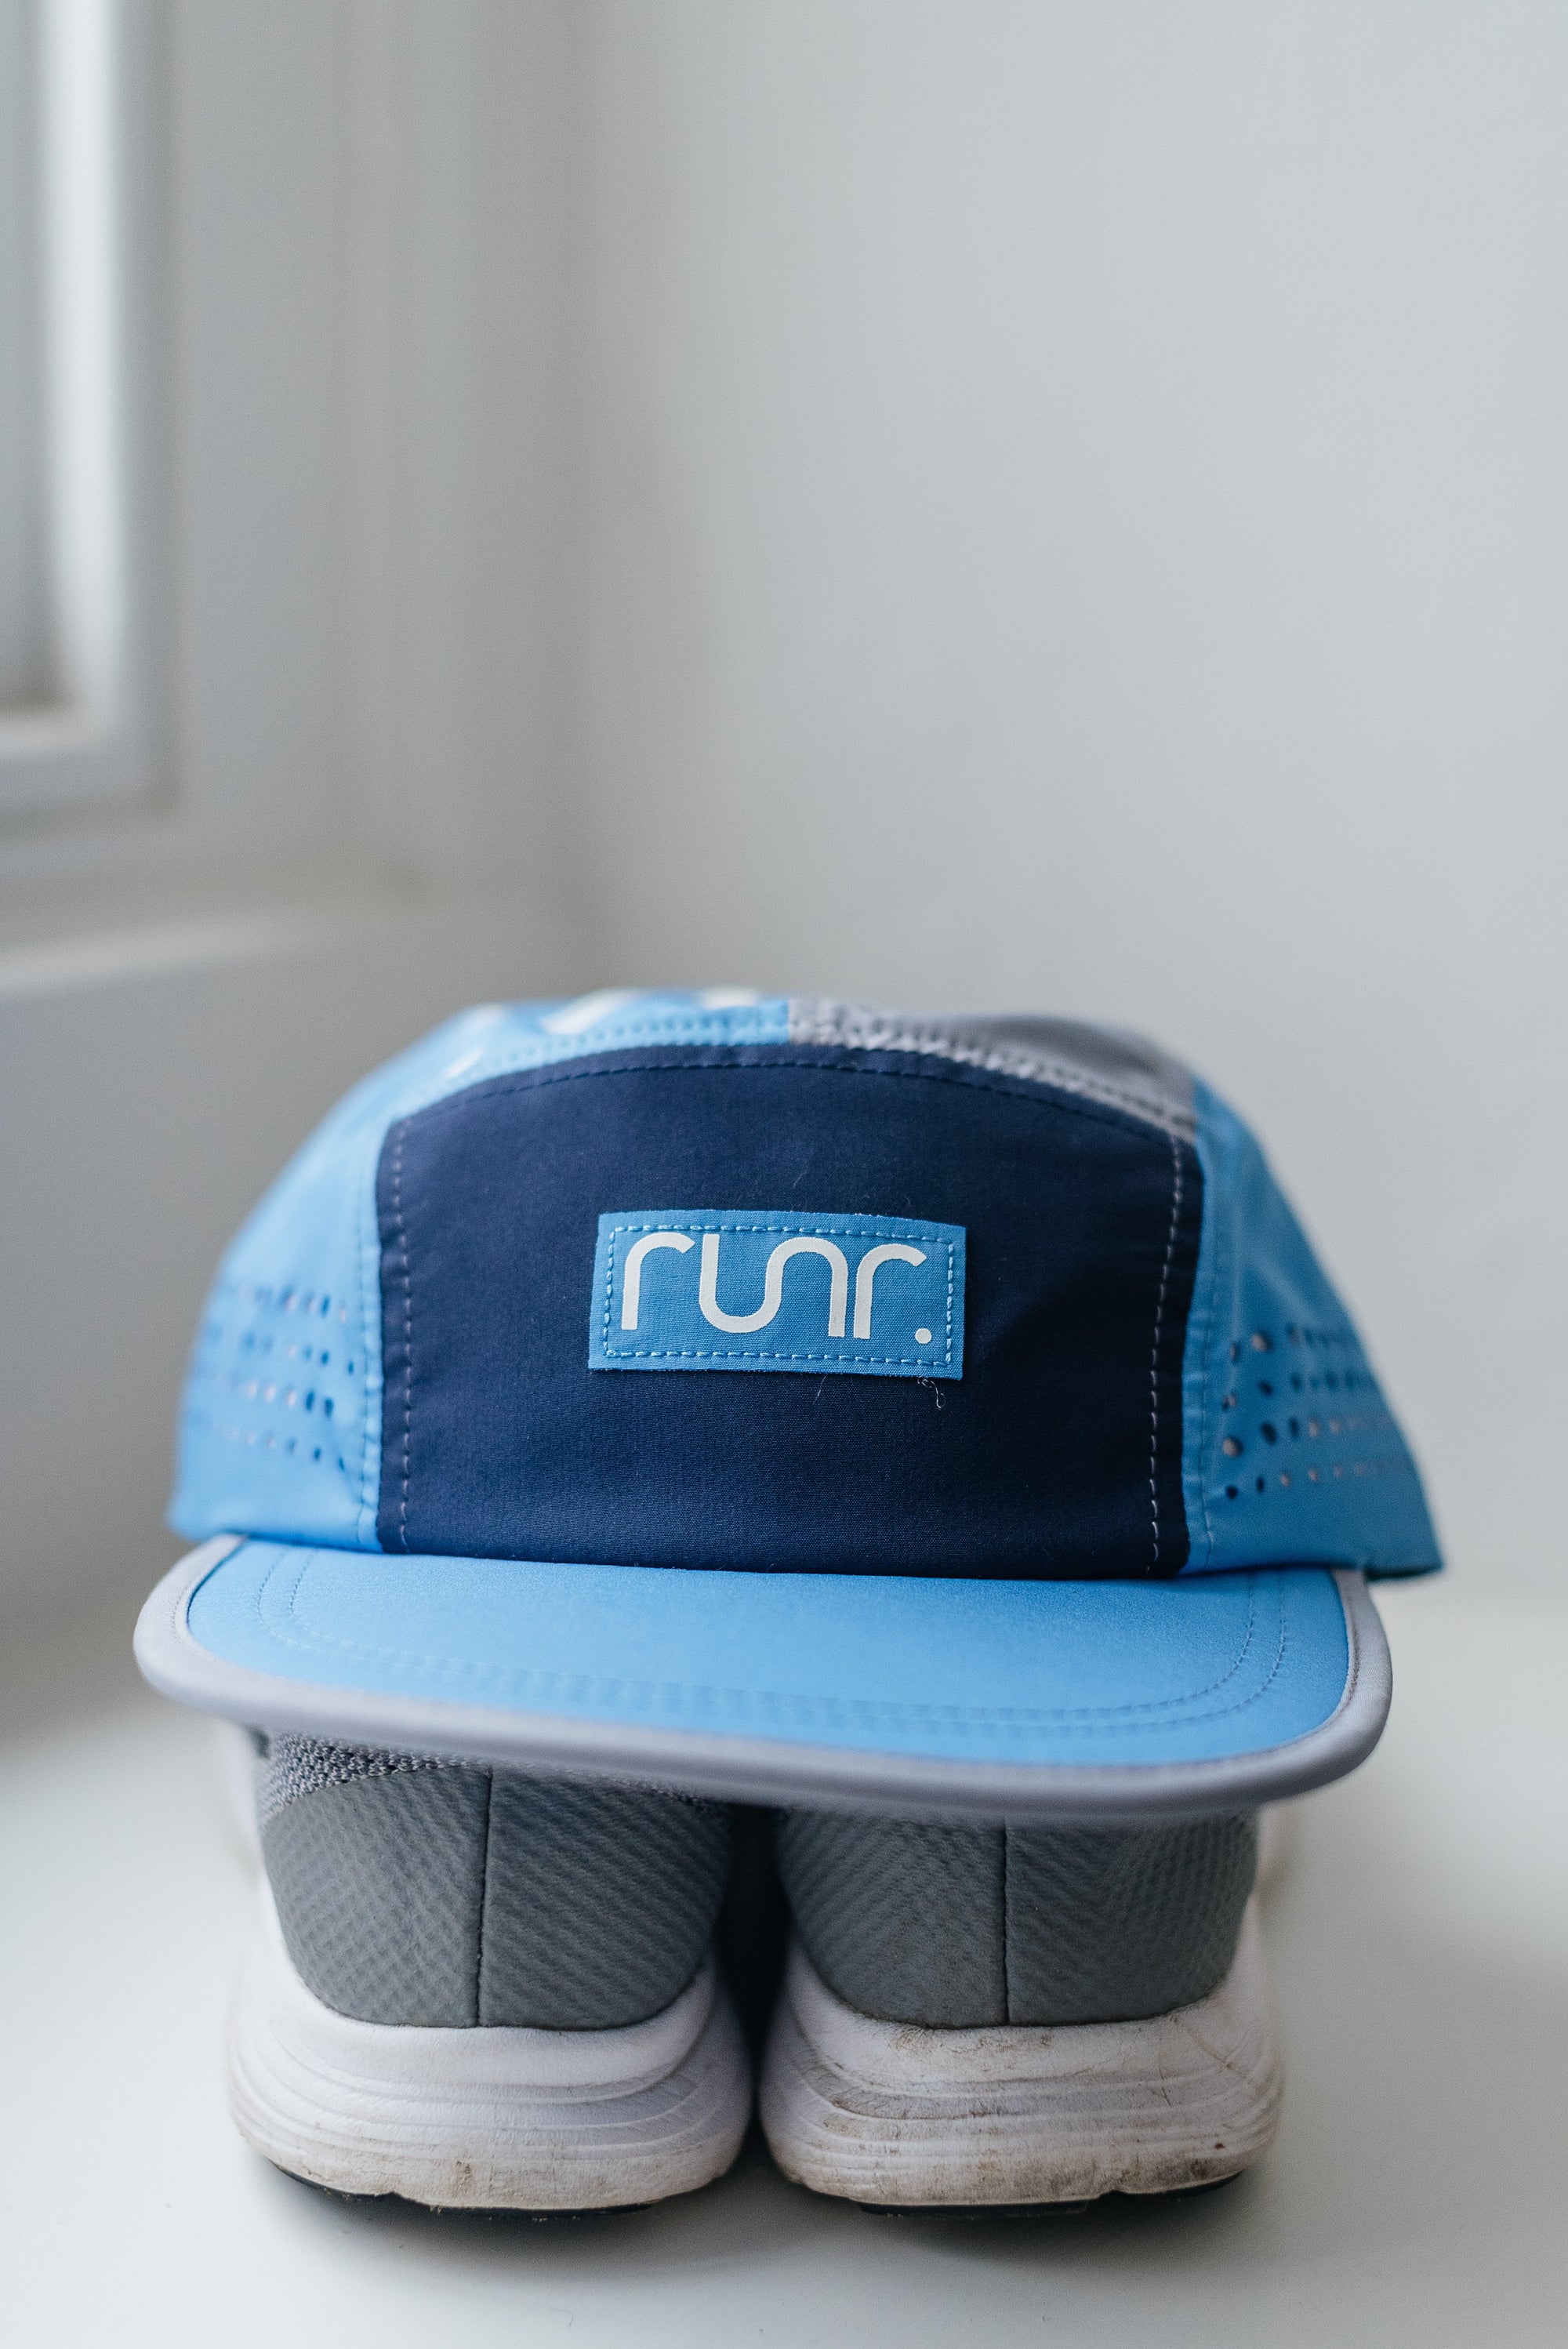 Runr Montreal Technical Running Hat